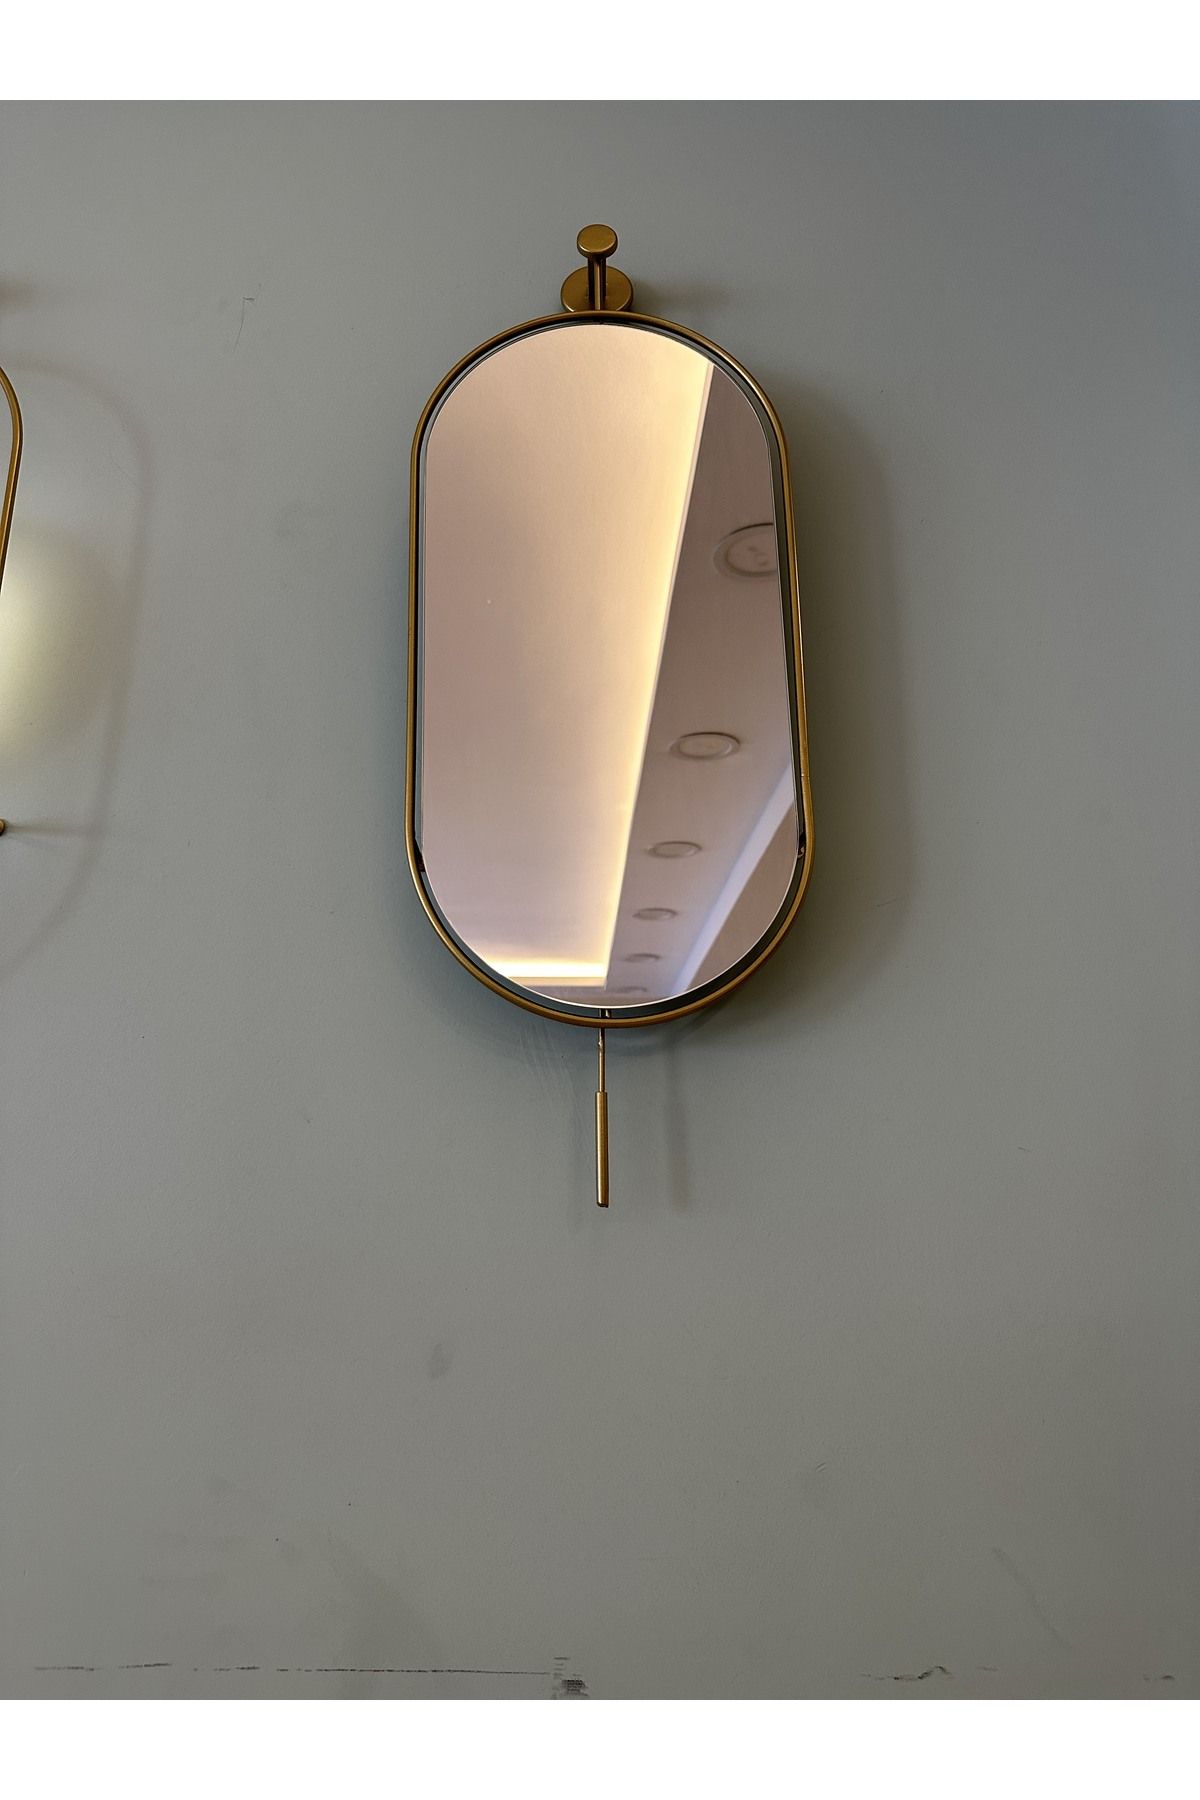 MetaQuartz Aksesuar Serenity Gold Ayna, Dekoratif Modern Duvar Aynası